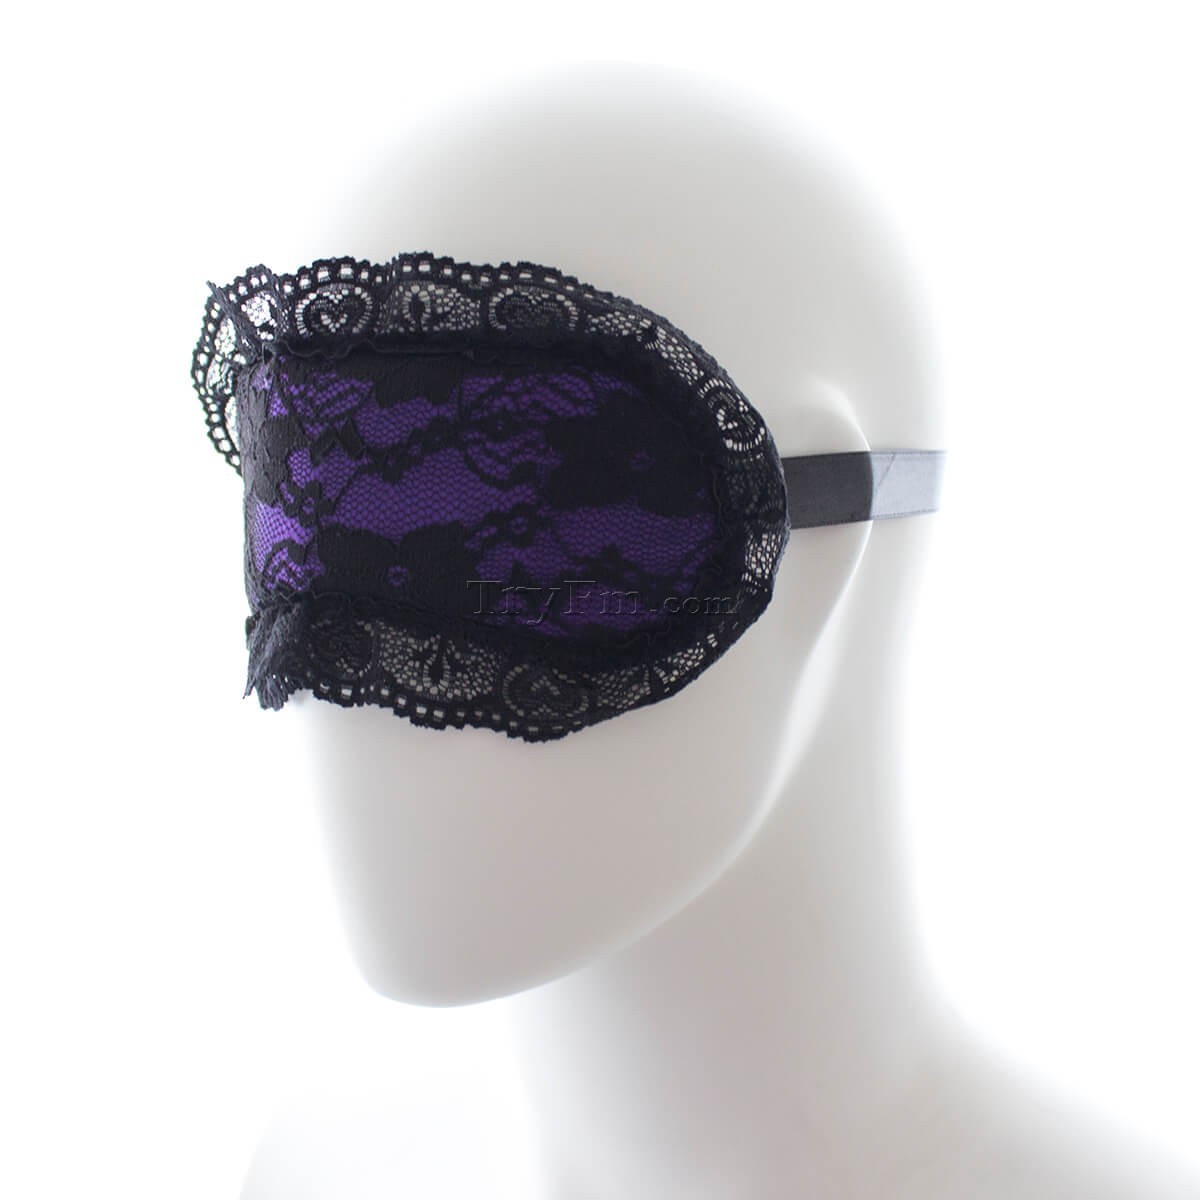 2-lace-blindfold-handcuffs-set-purple8.jpg